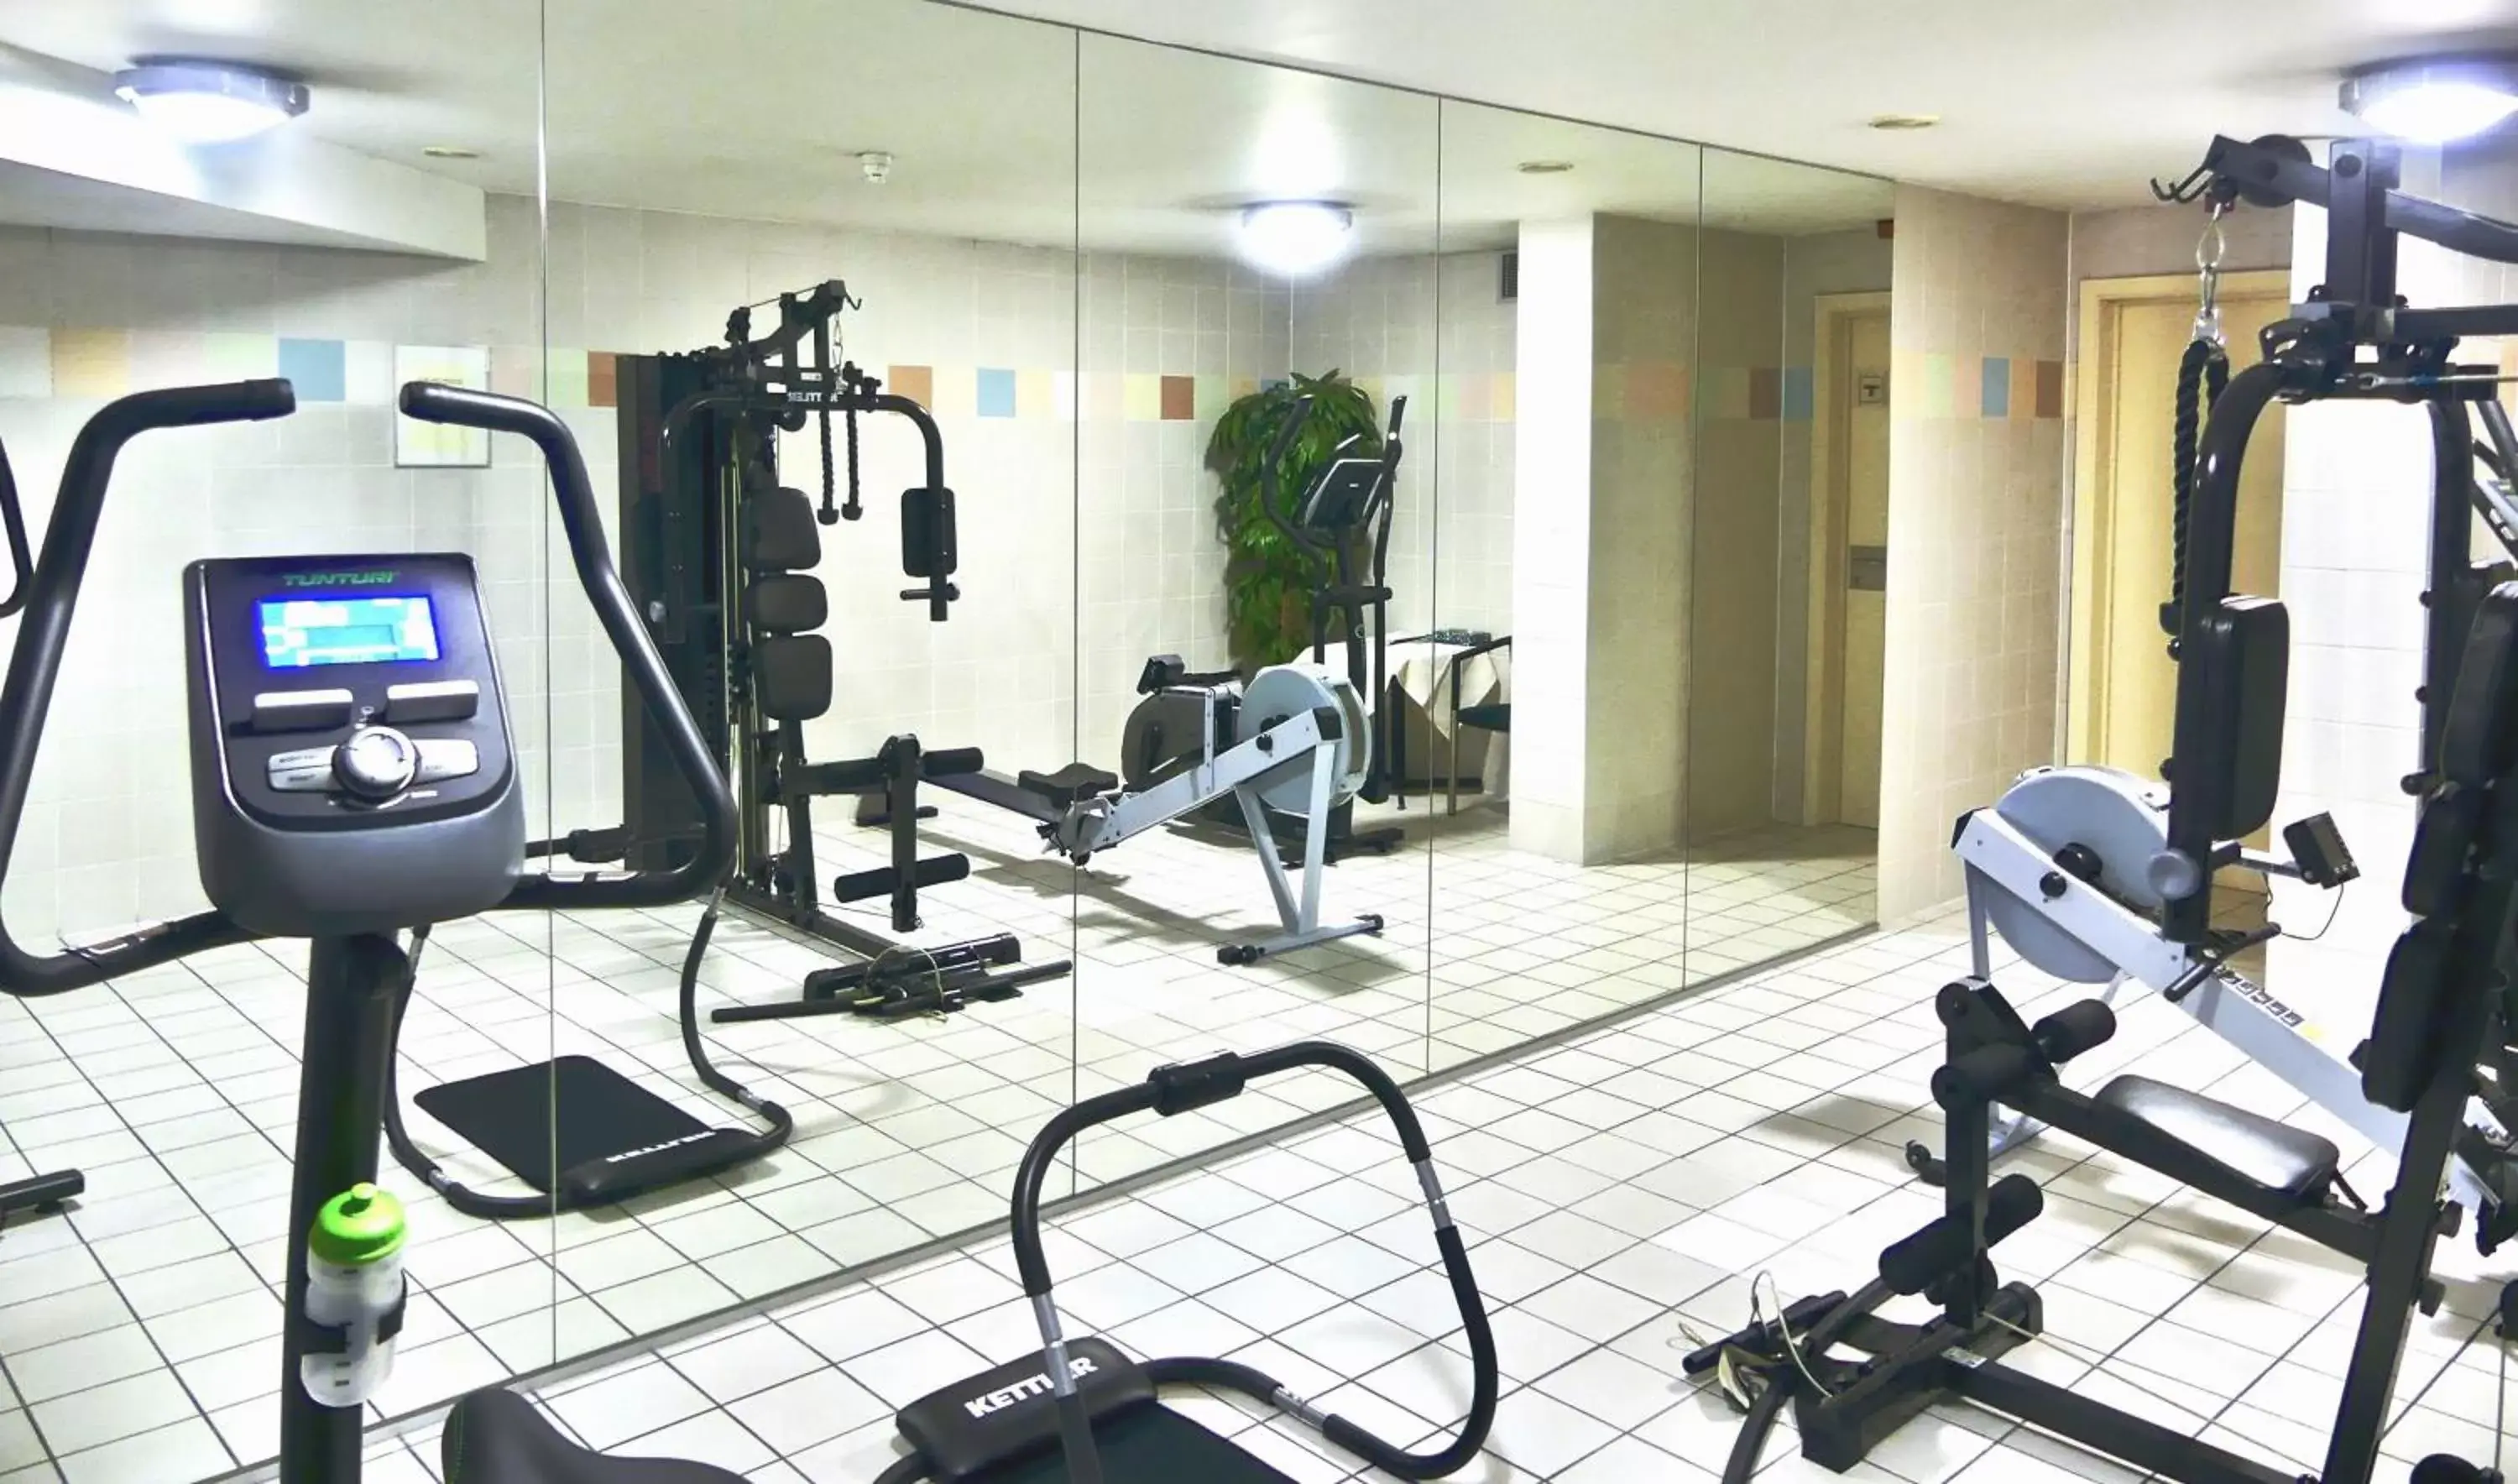 Fitness centre/facilities, Fitness Center/Facilities in Golden Tulip Hotel de’ Medici